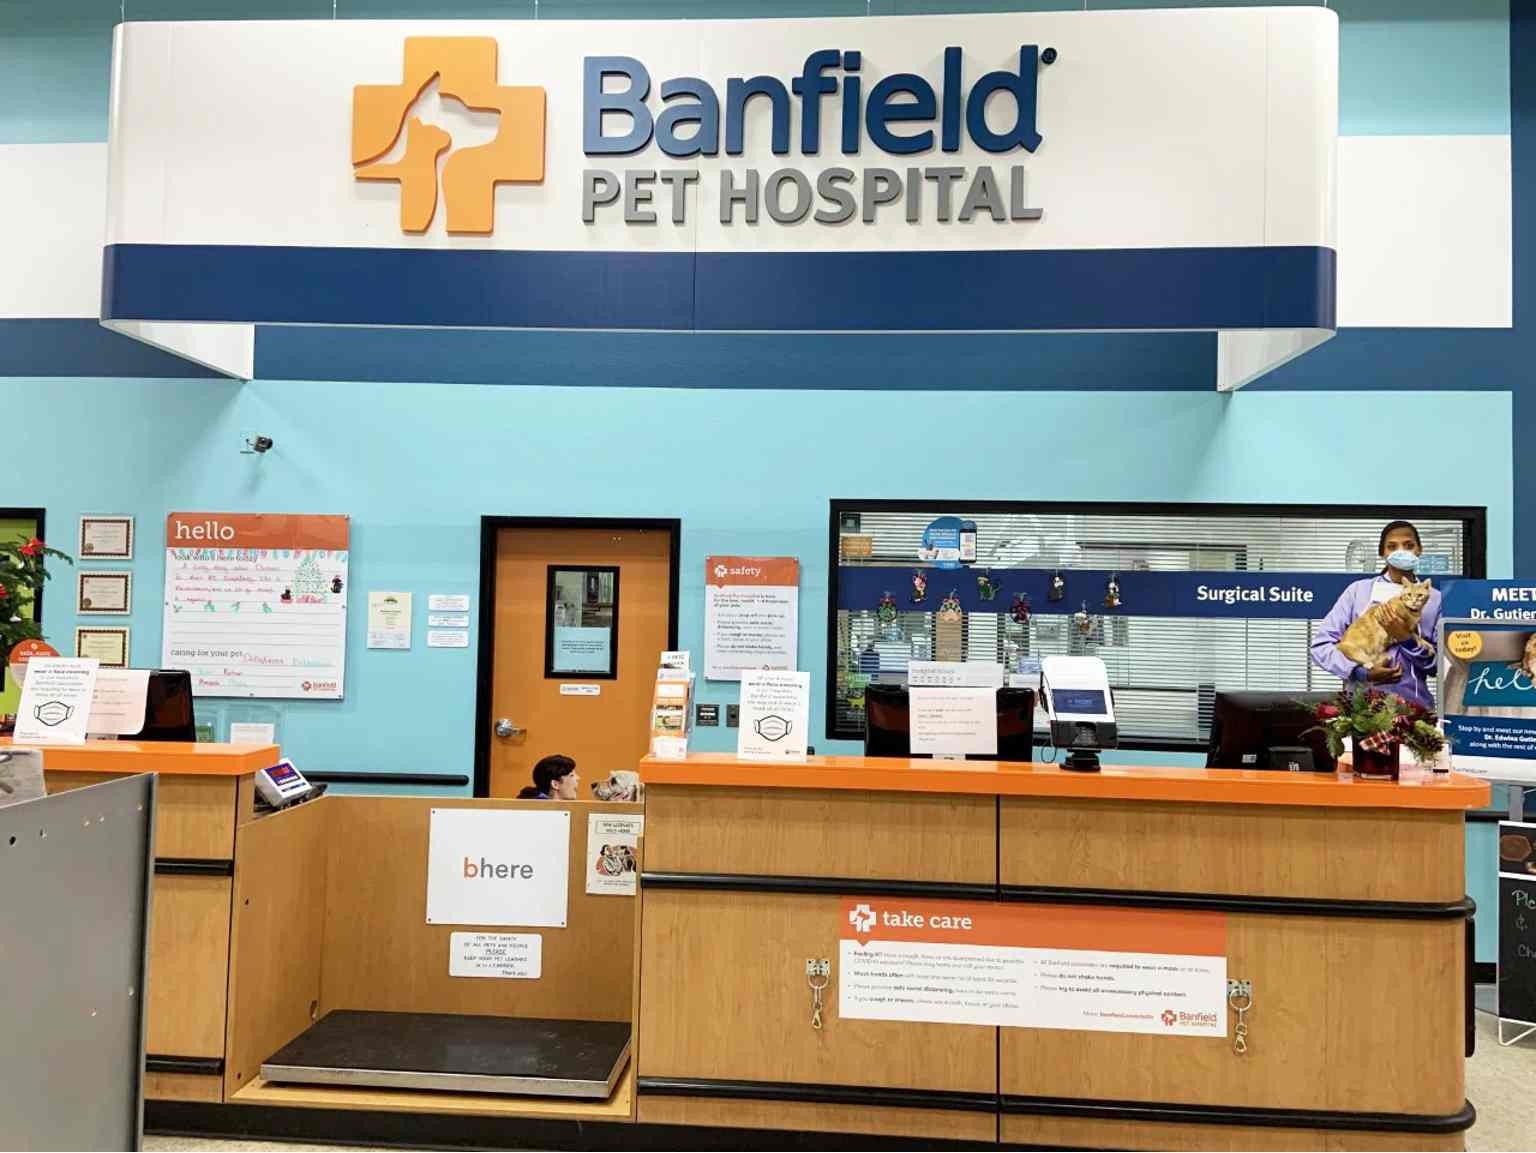 Banfield pet hospital office